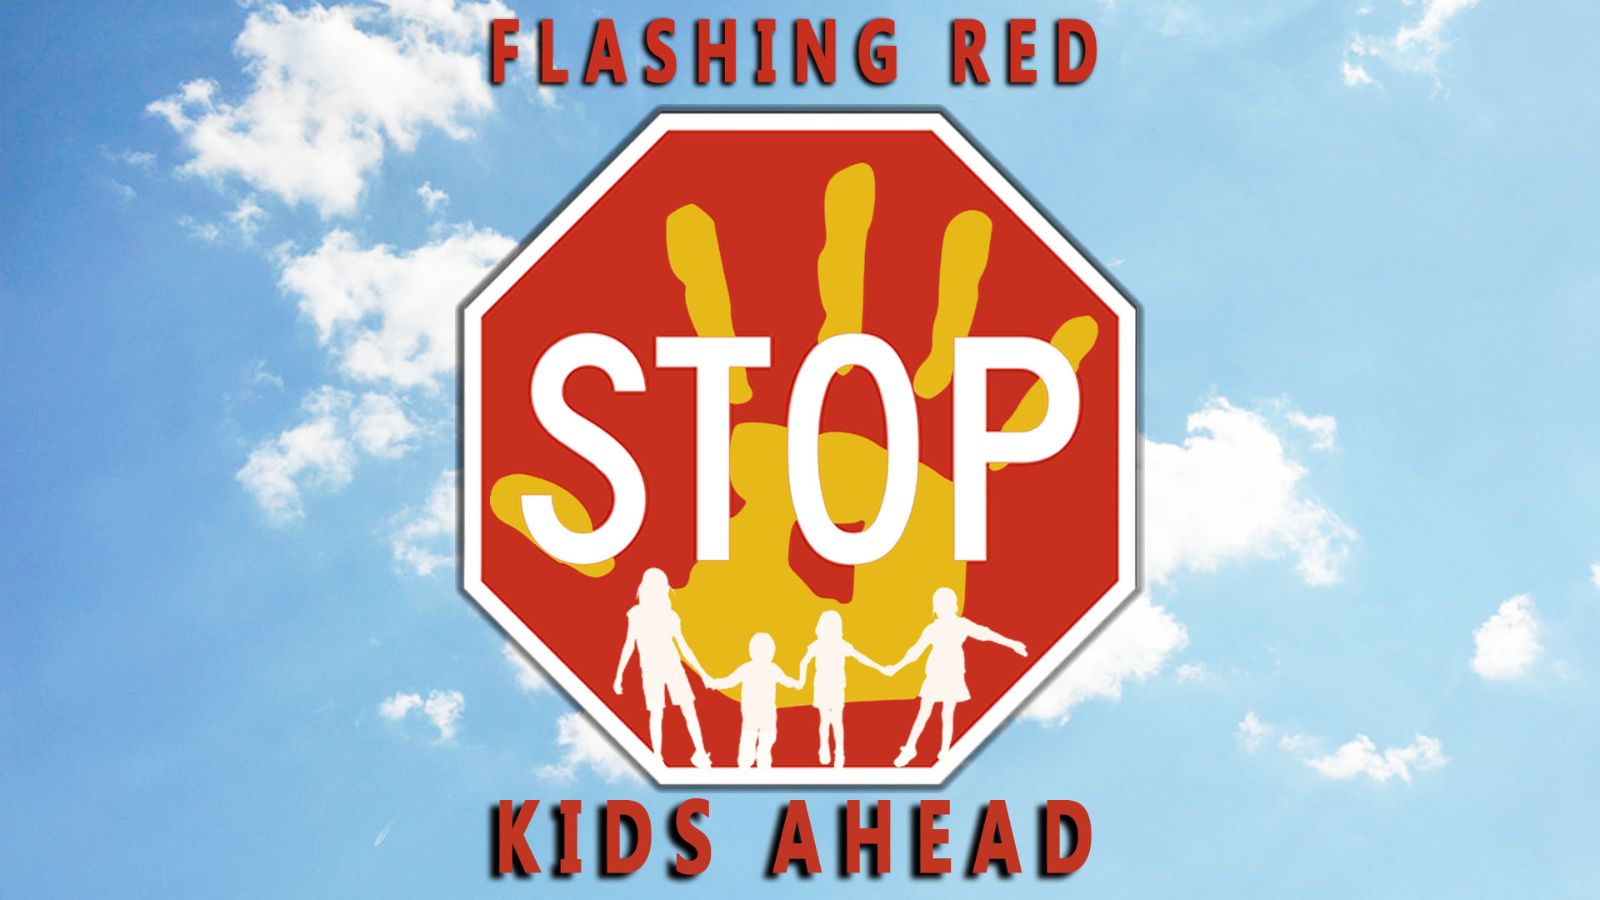 Flashing Red, Kids Ahead